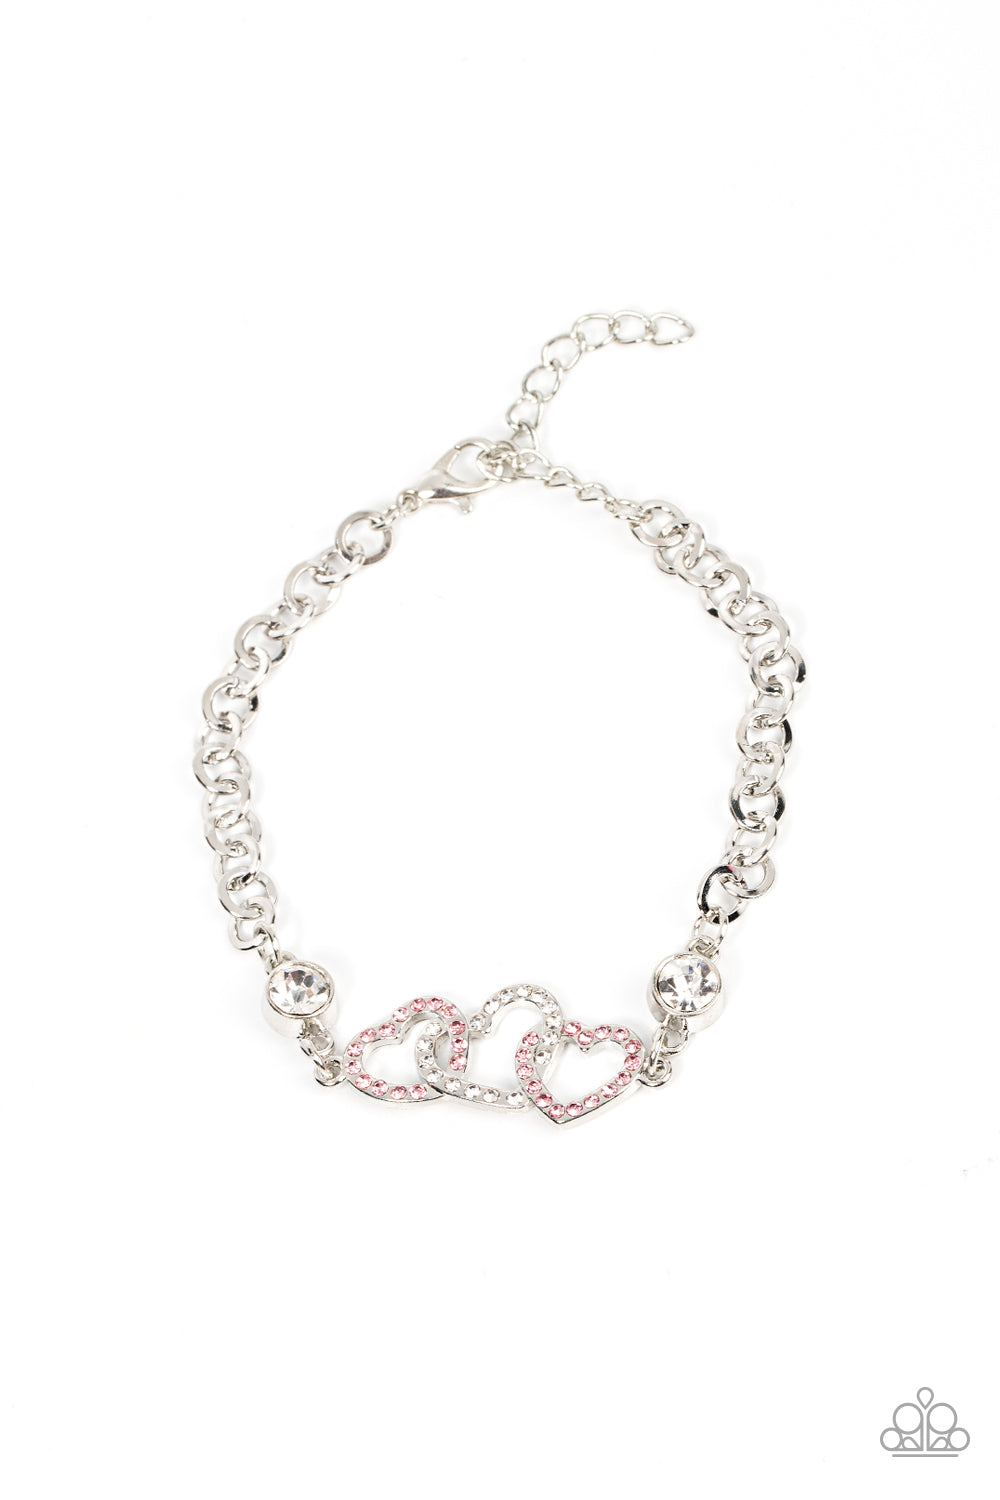 Desirable Dazzle - Pink and White Heart Rhinestone Bracelet - Paparazzi Accessories